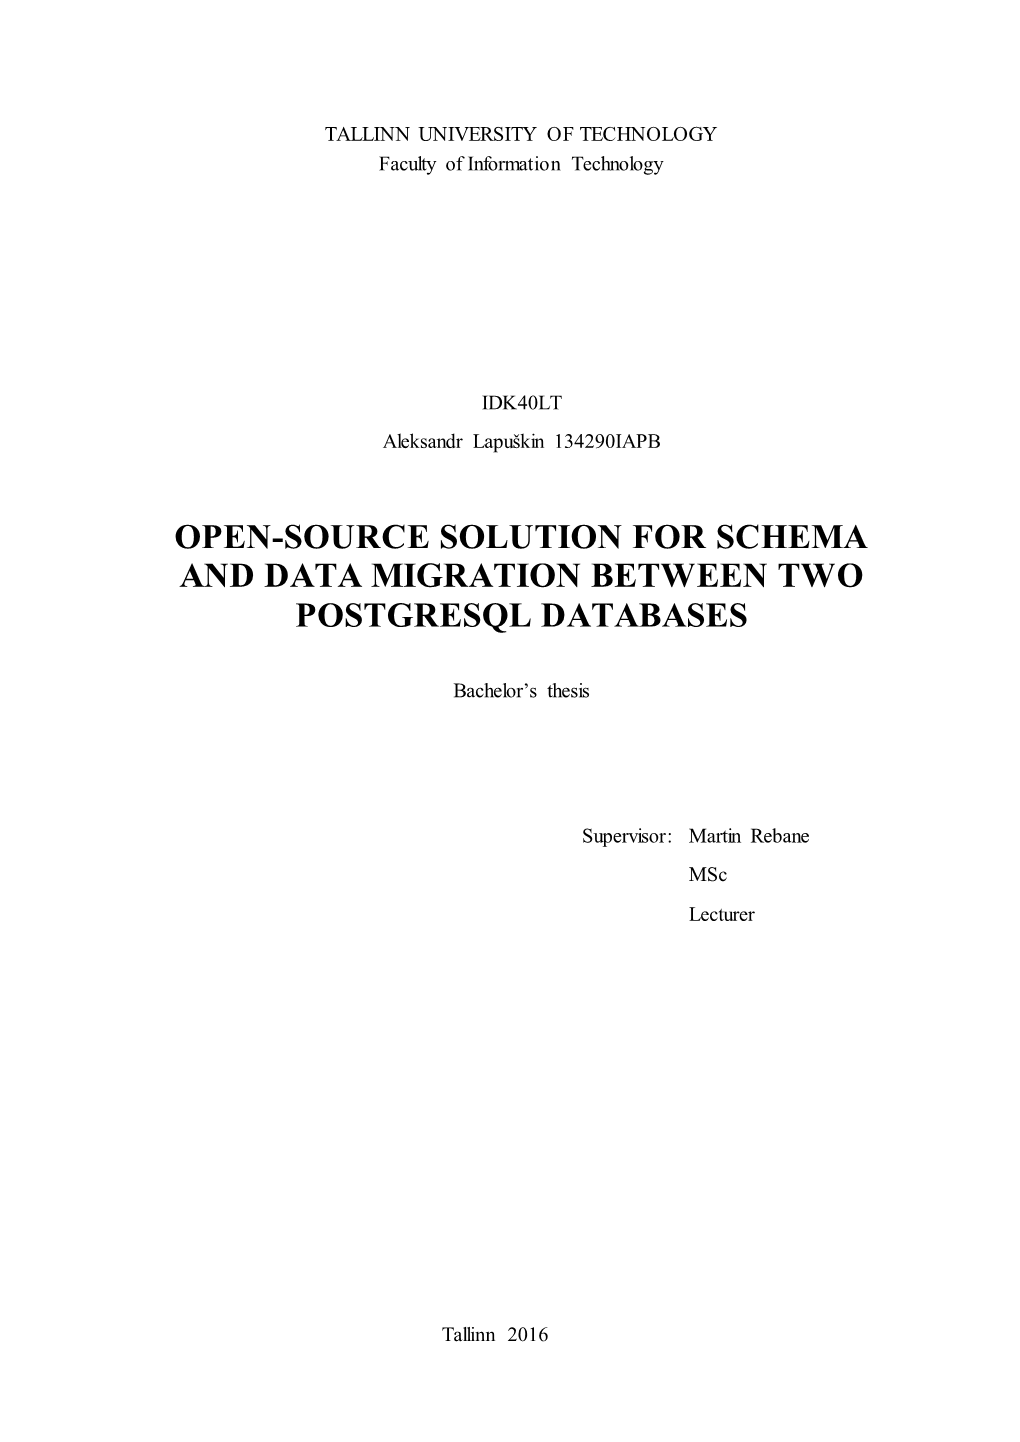 Open-Source Solution for Schema and Data Migration Between Two Postgresql Databases